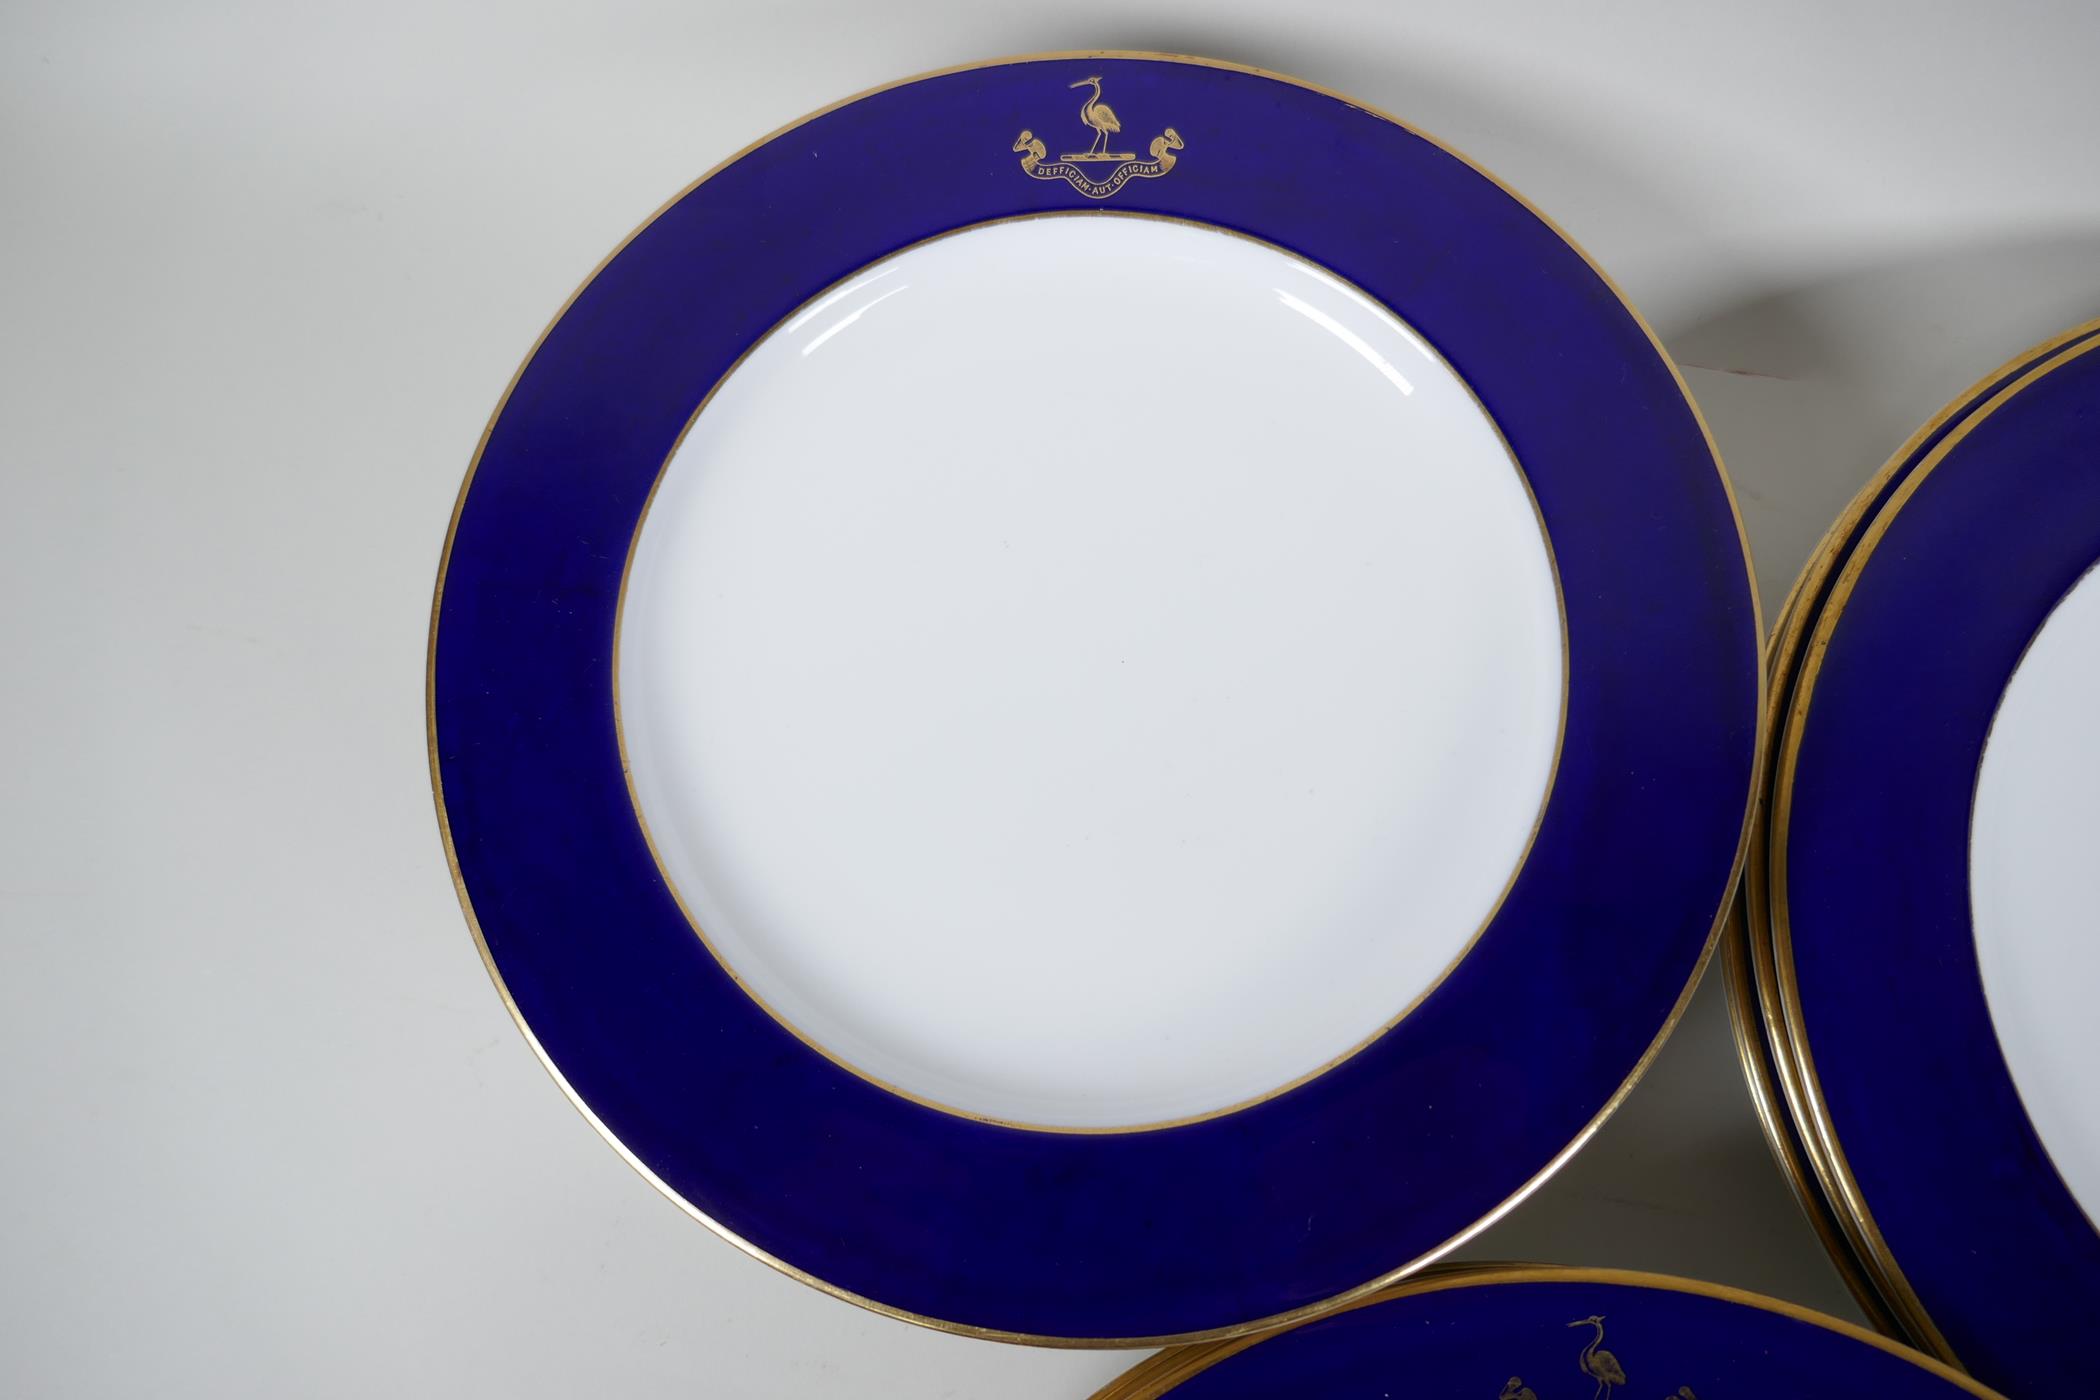 Vintage Royal Worcester cobalt blue and gilt decorated tableware, embellished with a heron crest and - Image 2 of 4